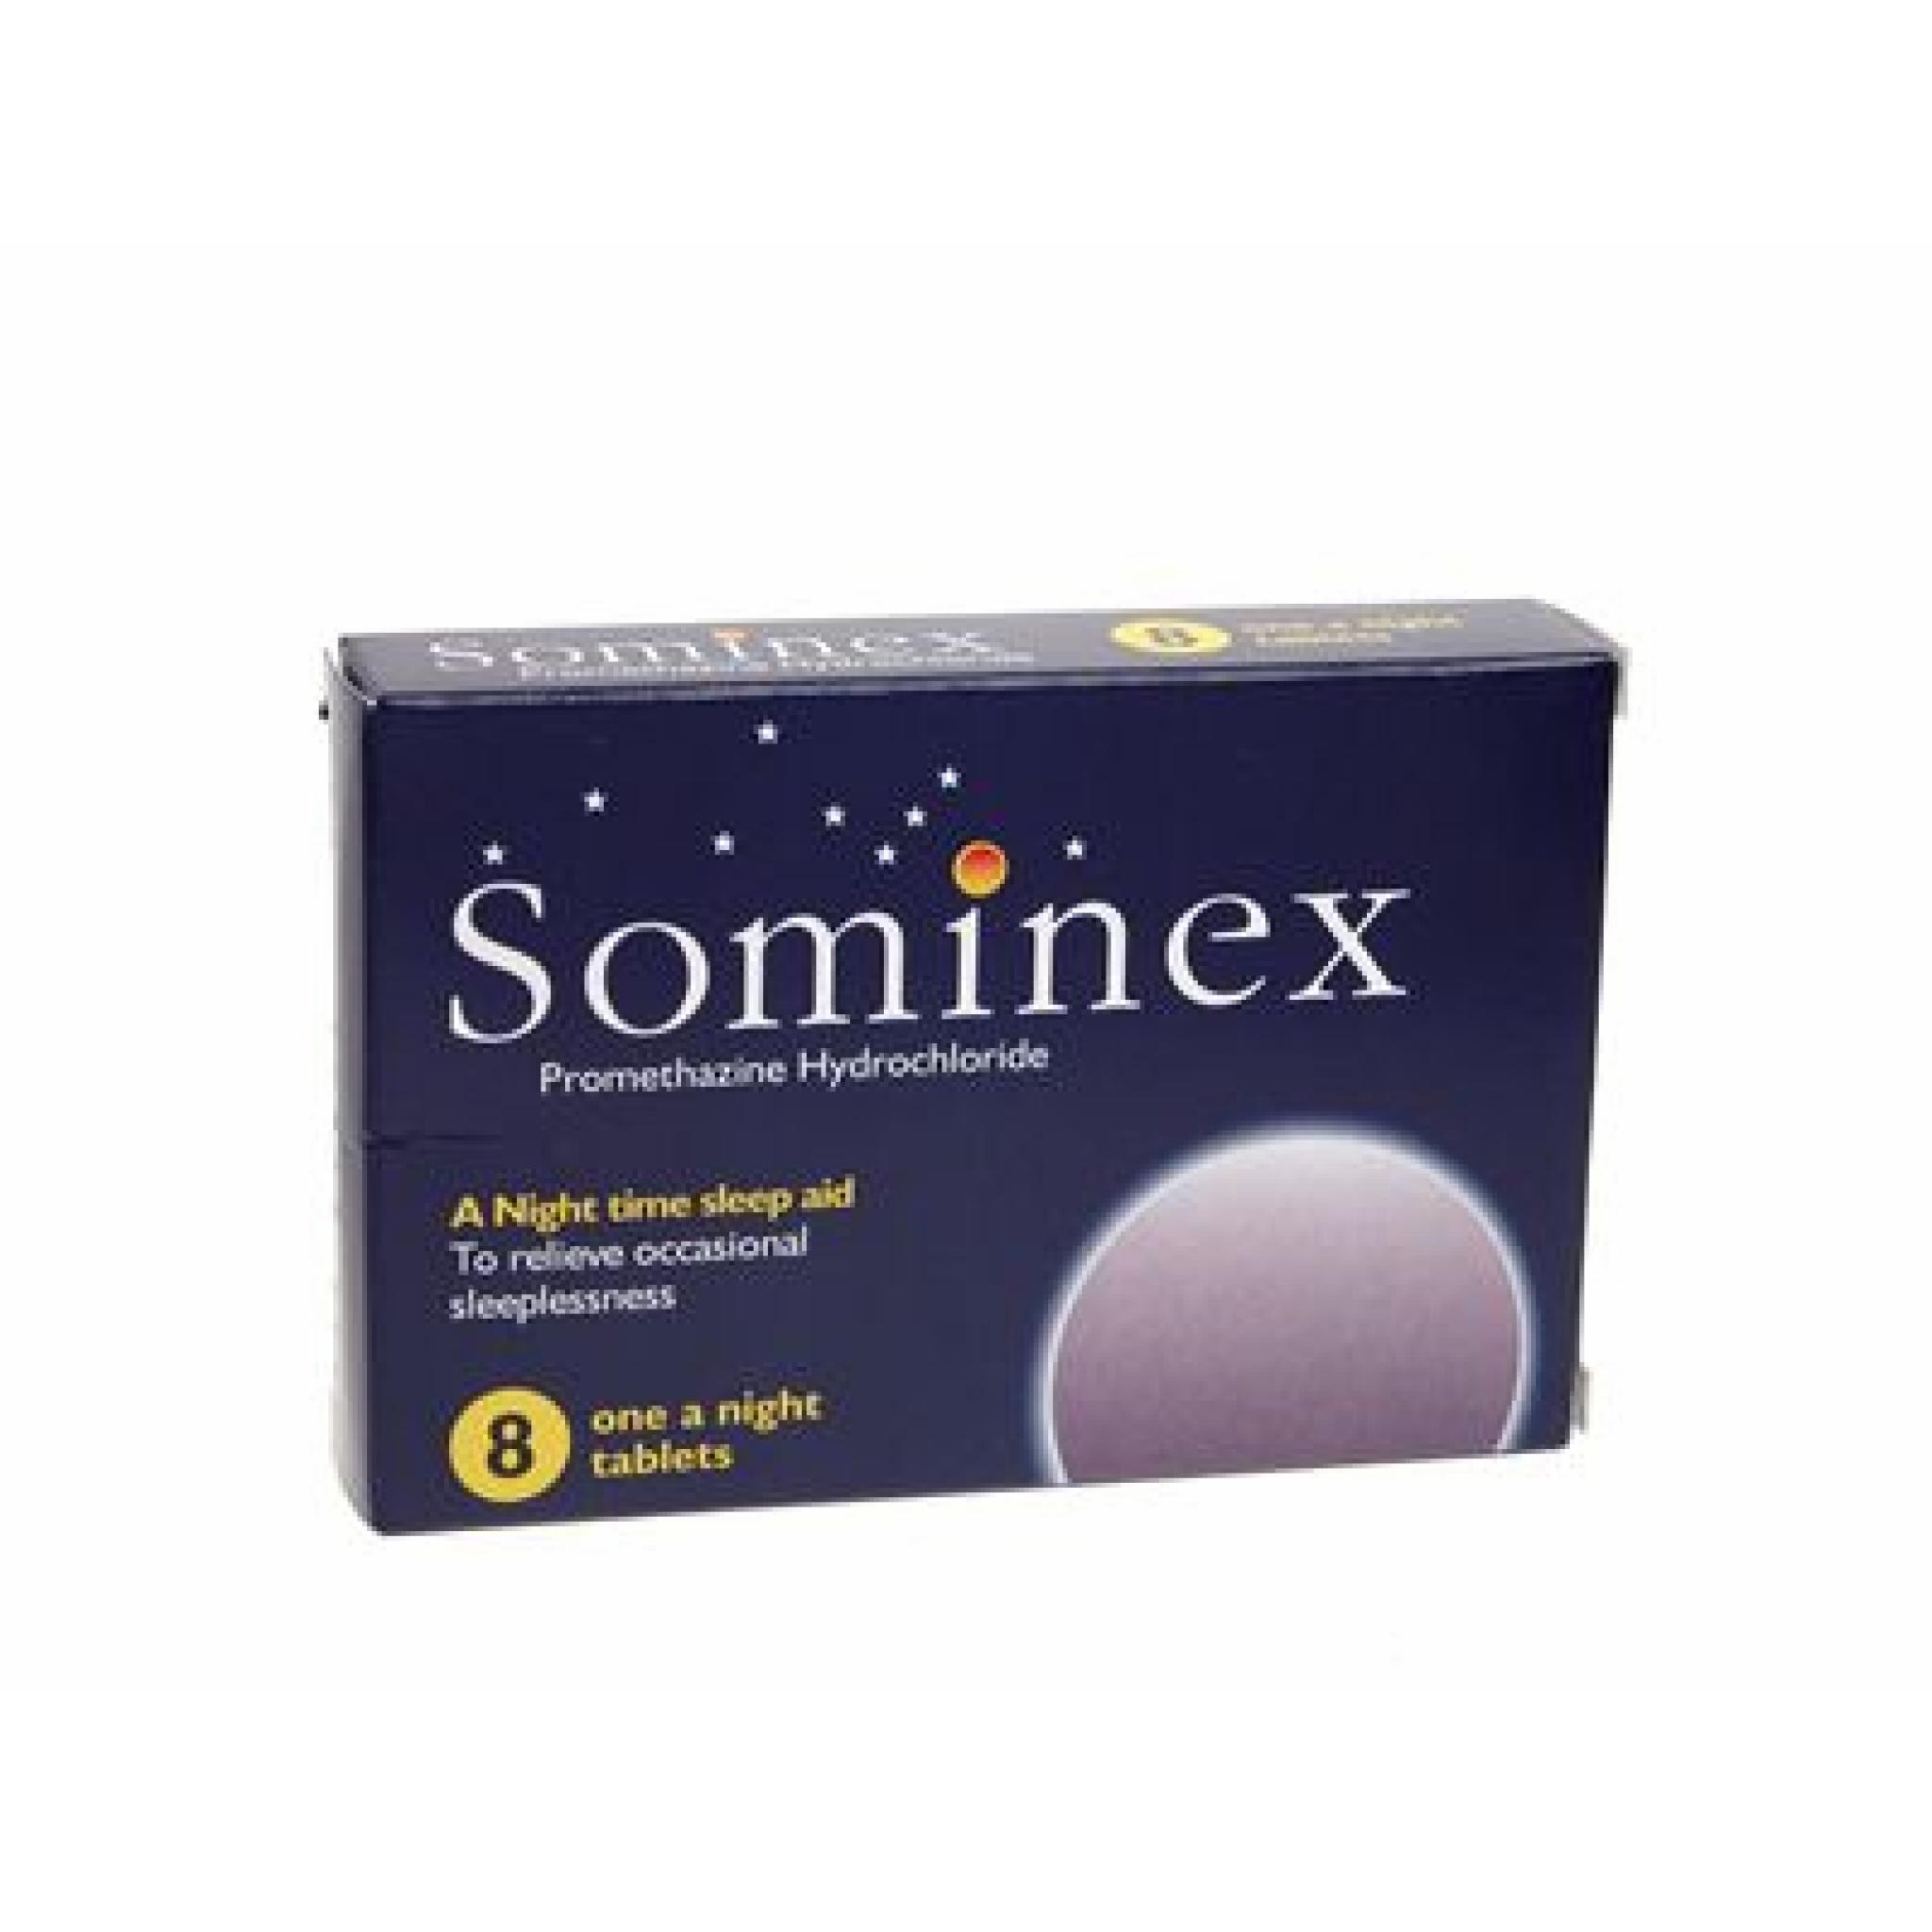 Sominex - promethazine hydrochloride tablets - a night time sleep aid